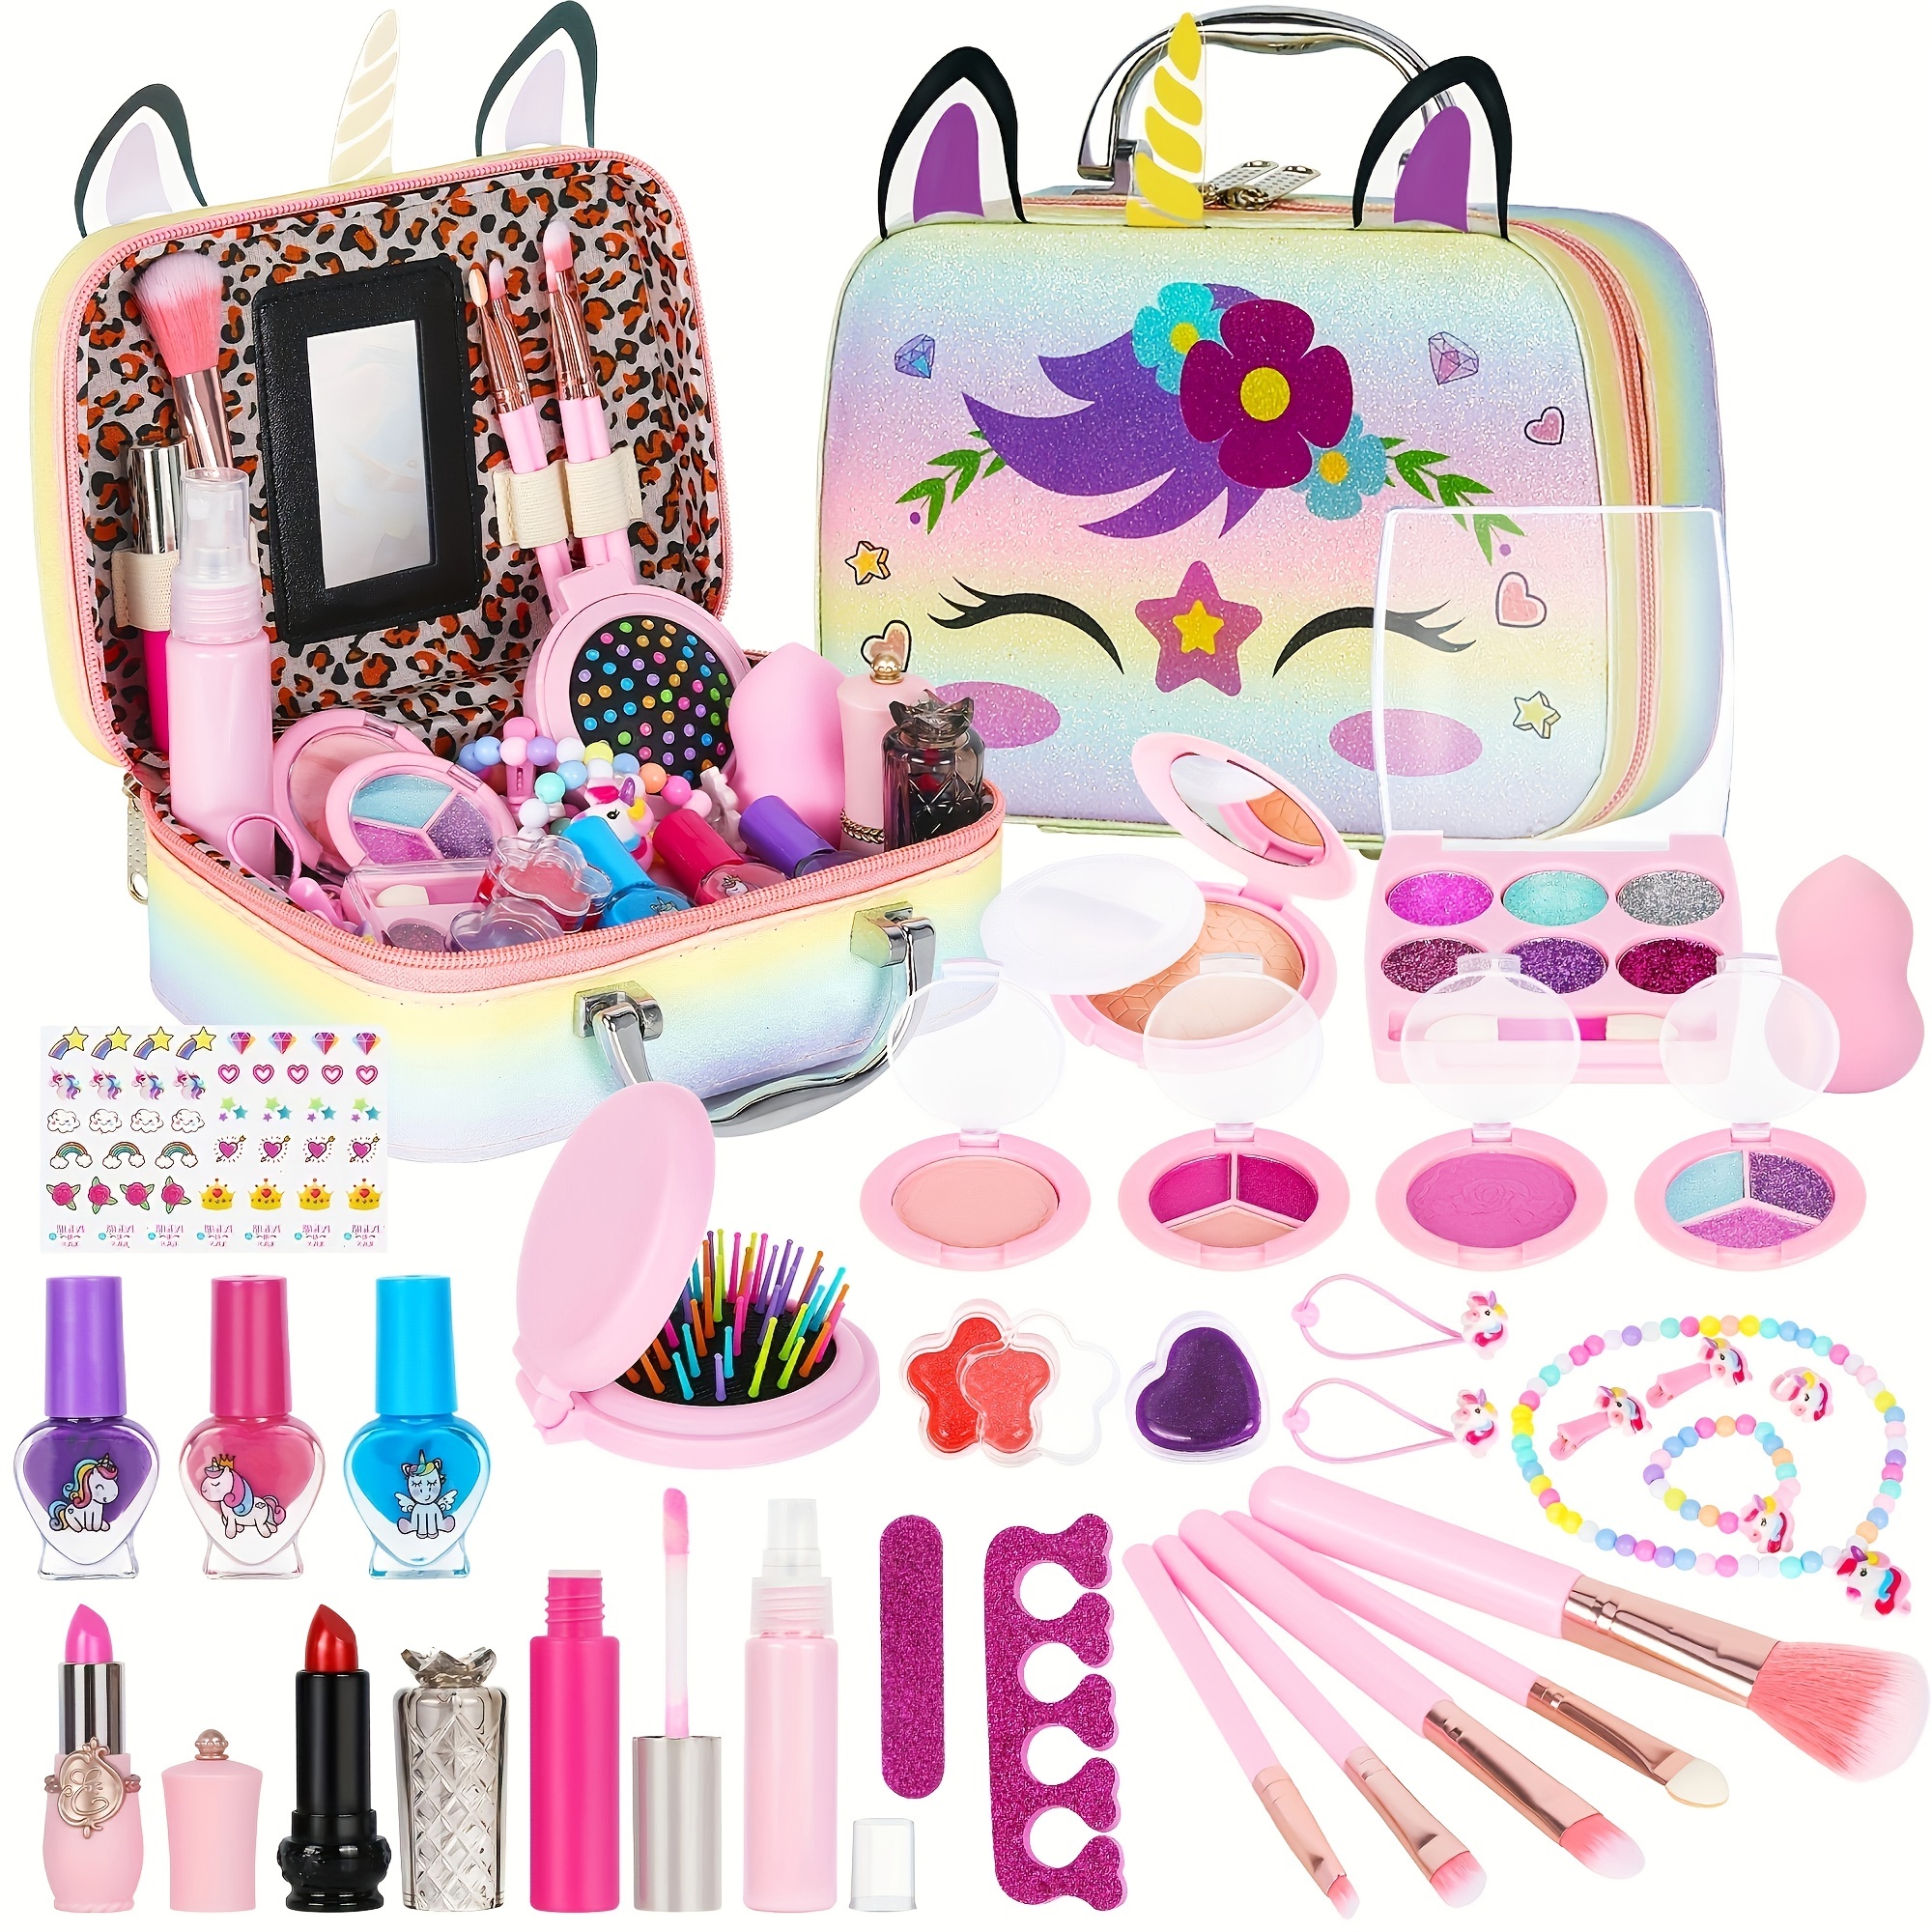 Kids Washable Makeup Girls Toys - Girls Makeup Kit for Kids Make